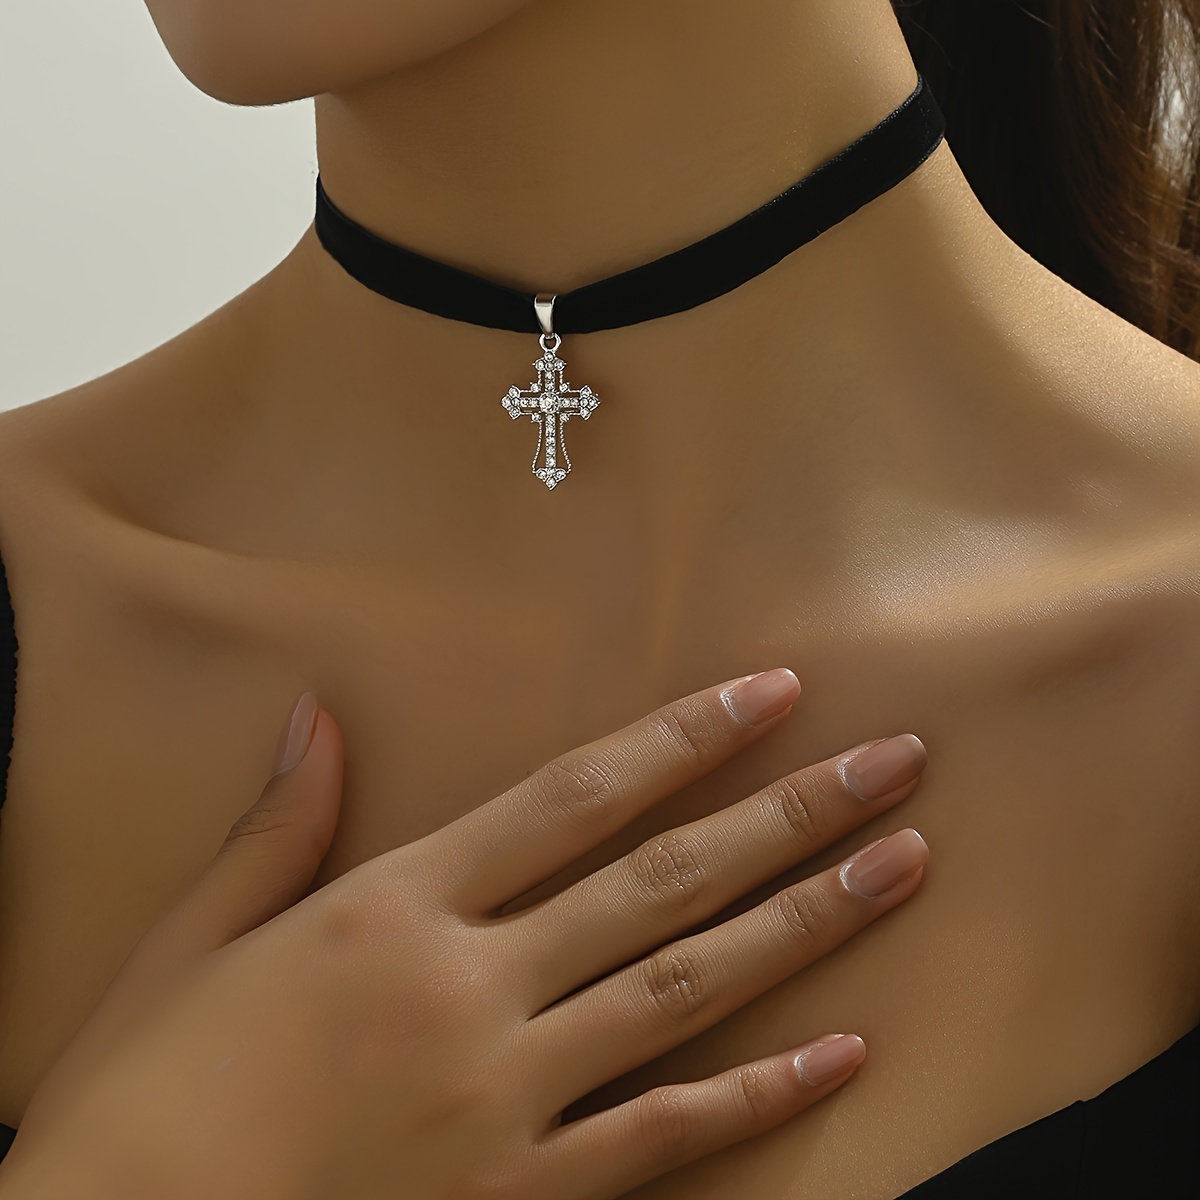 Pearl Cross Choker Necklaces - Heart Pendant Necklace Women Trendy Jewelry  1pc S